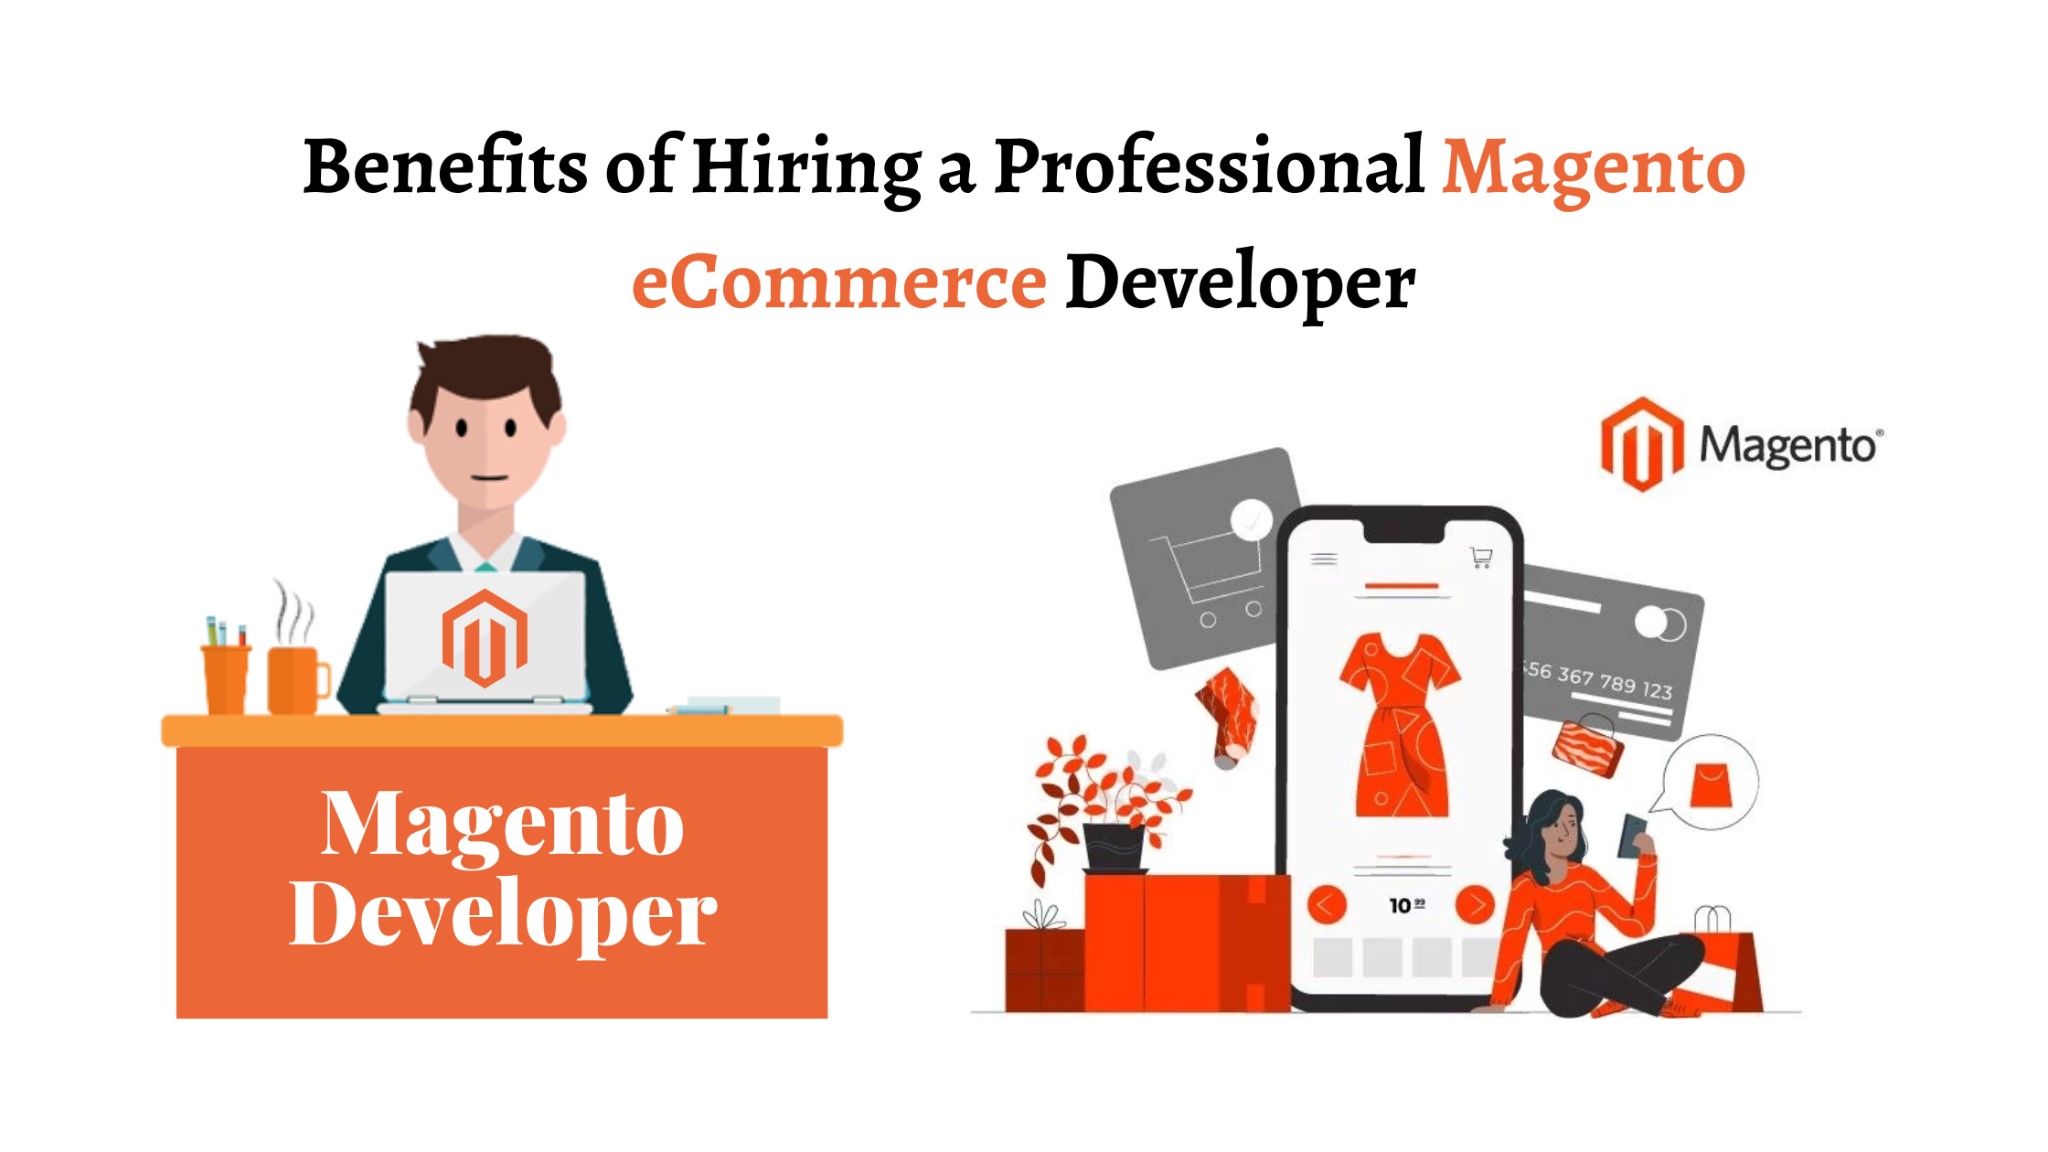 Benefits of Hiring a Professional Magento eCommerce Developer